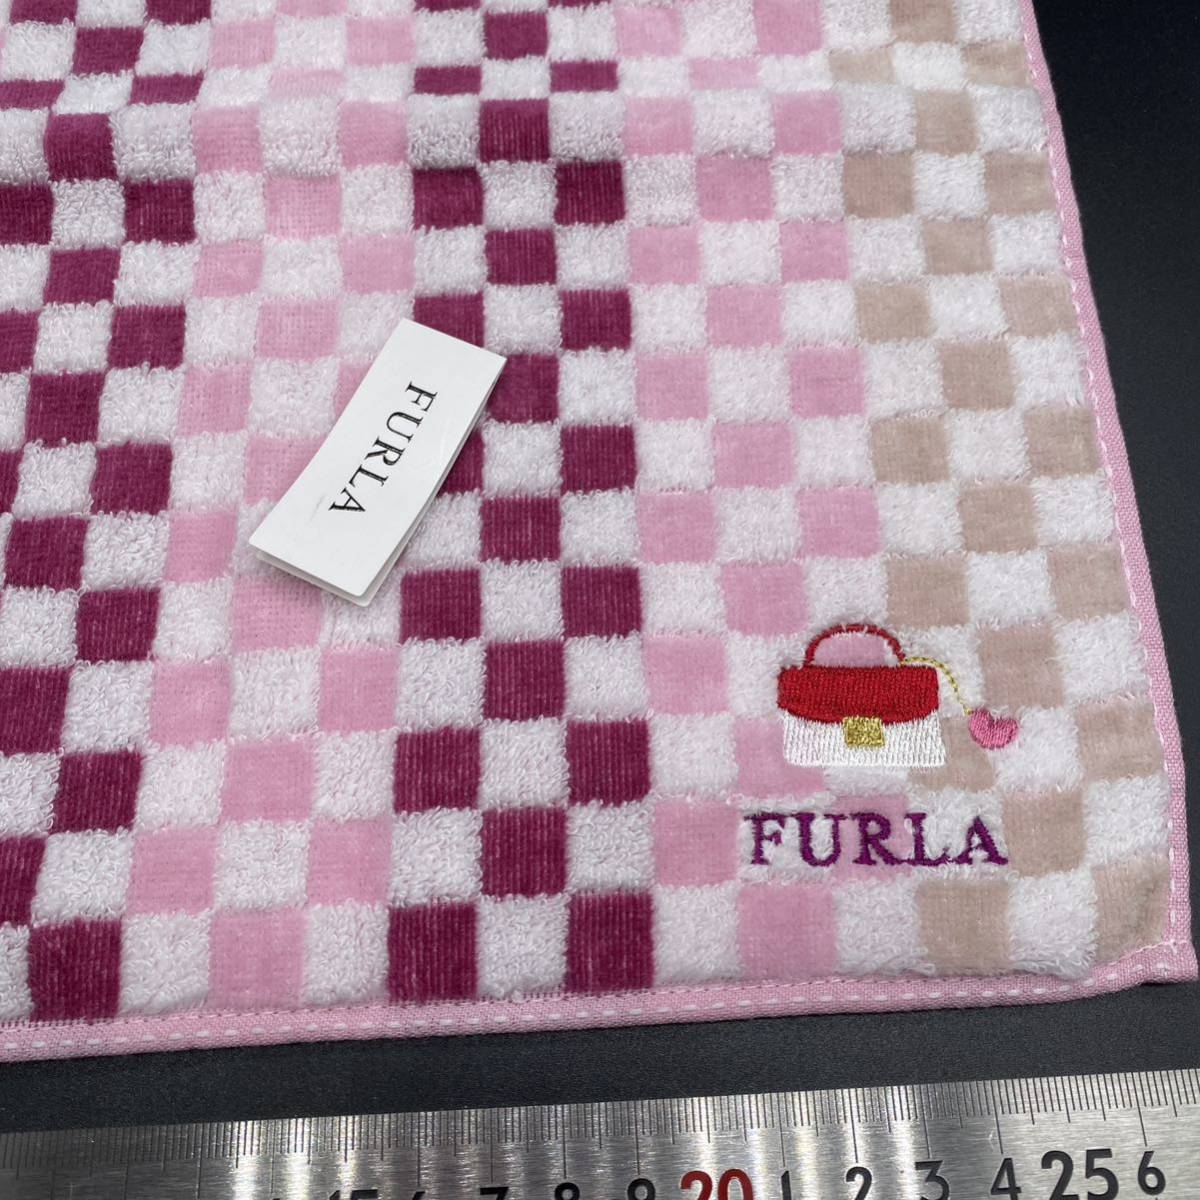 FURLA Furla towel handkerchie city pine pattern pink series bag embroidery no.34